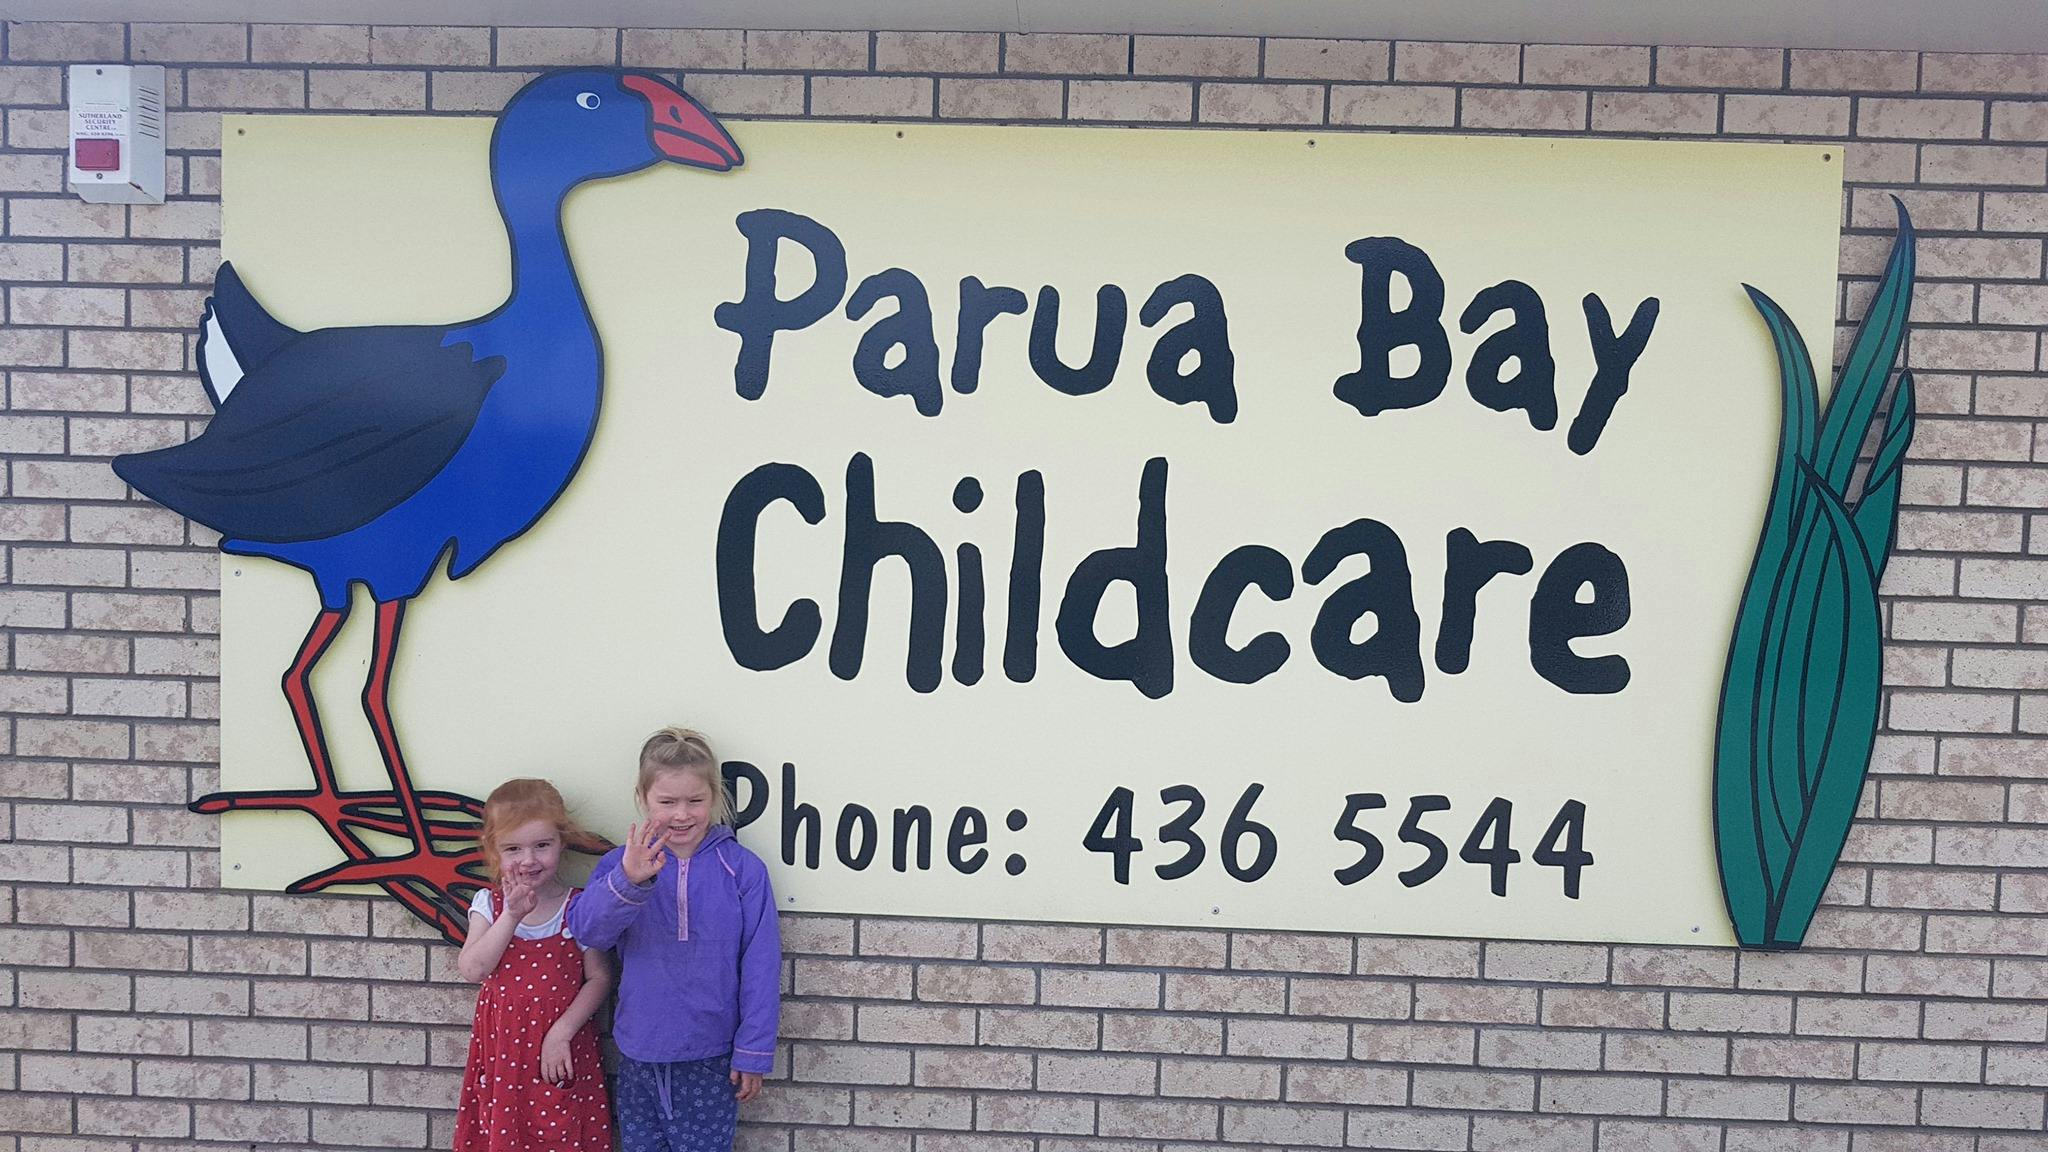 A picture of Parua Bay Childcare